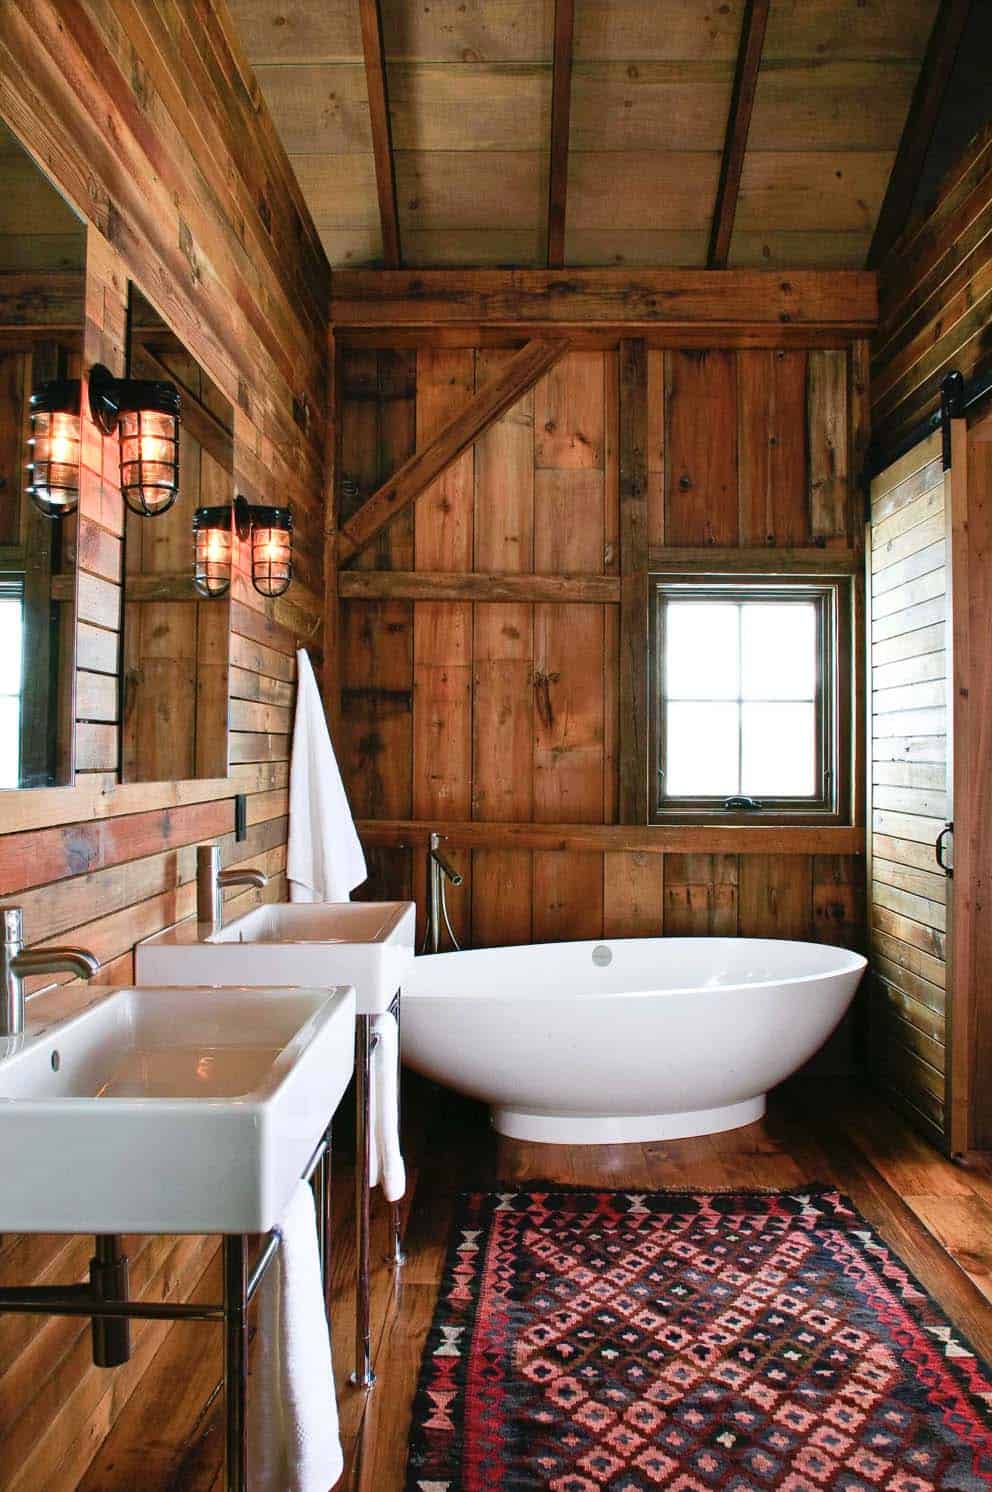 Rustic barn bathroom with freestanding tub and sliding door